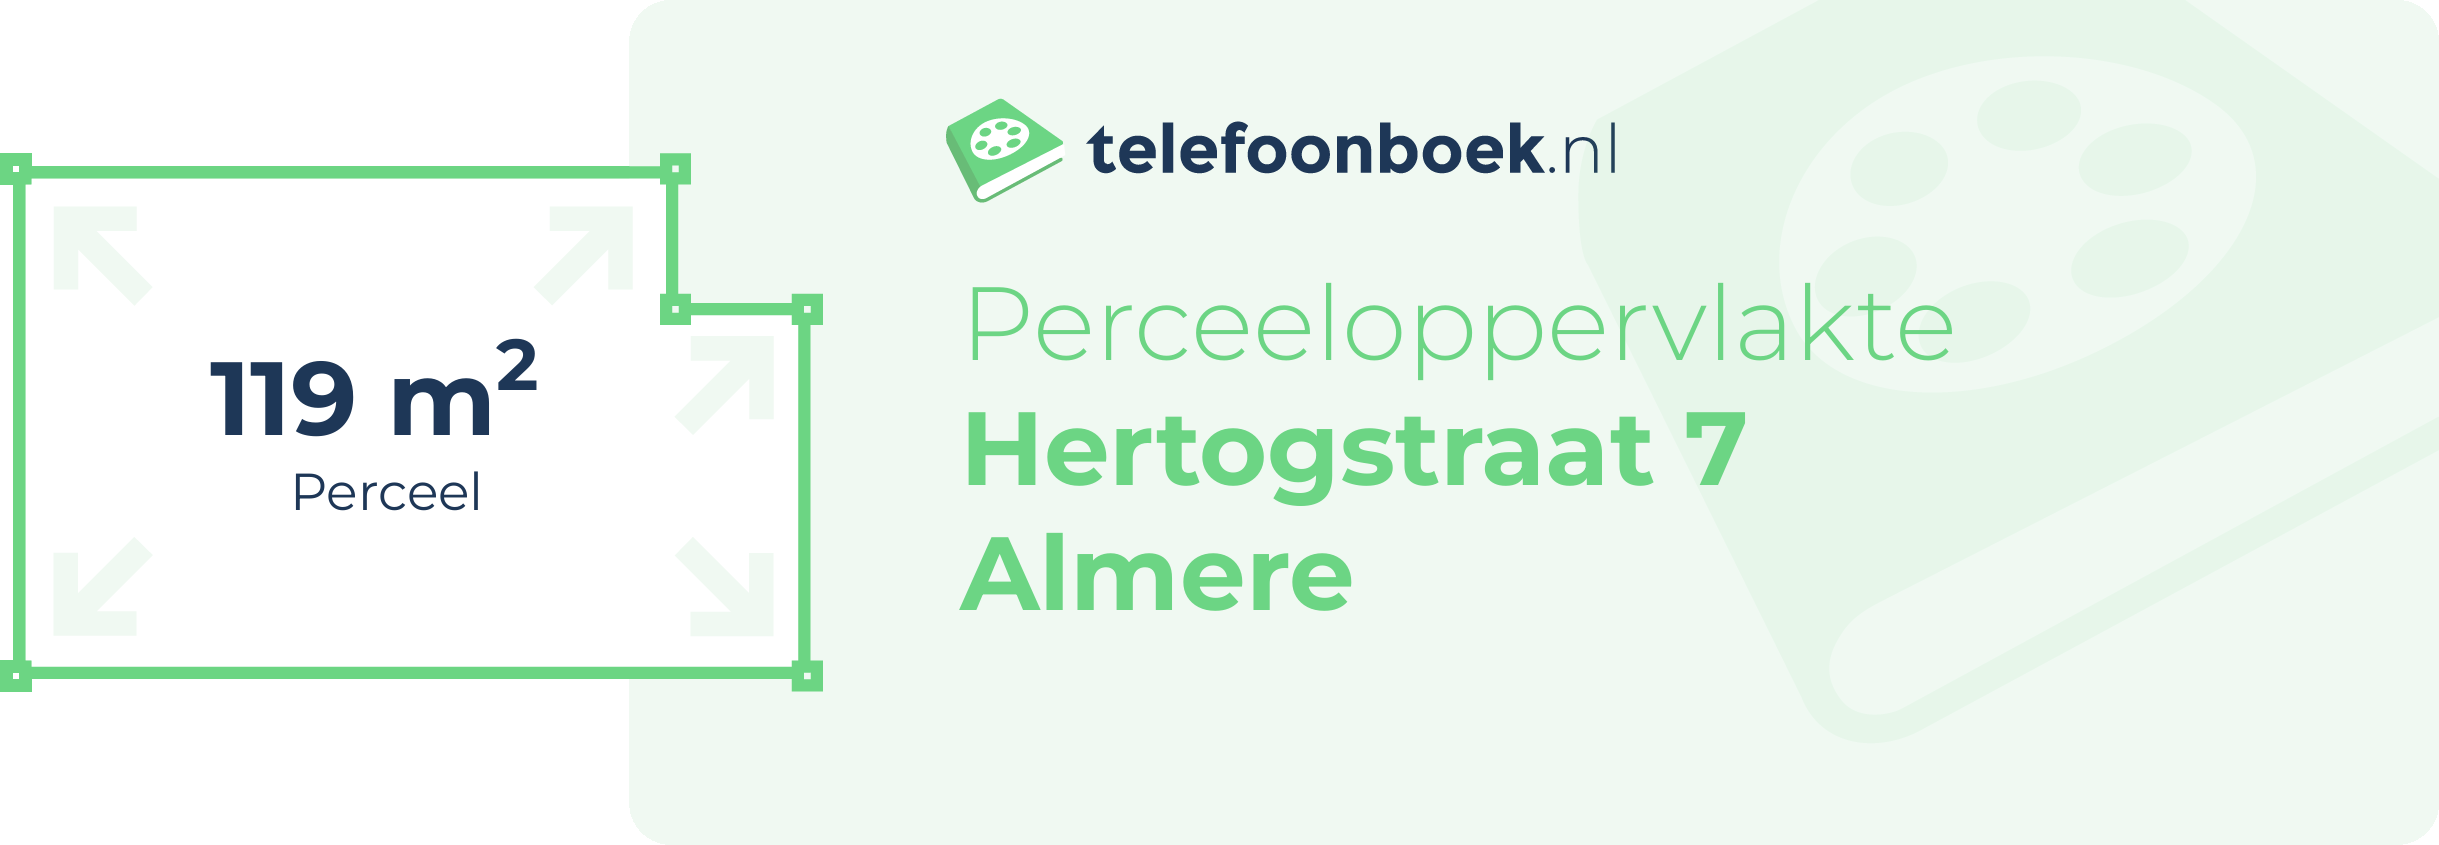 Perceeloppervlakte Hertogstraat 7 Almere